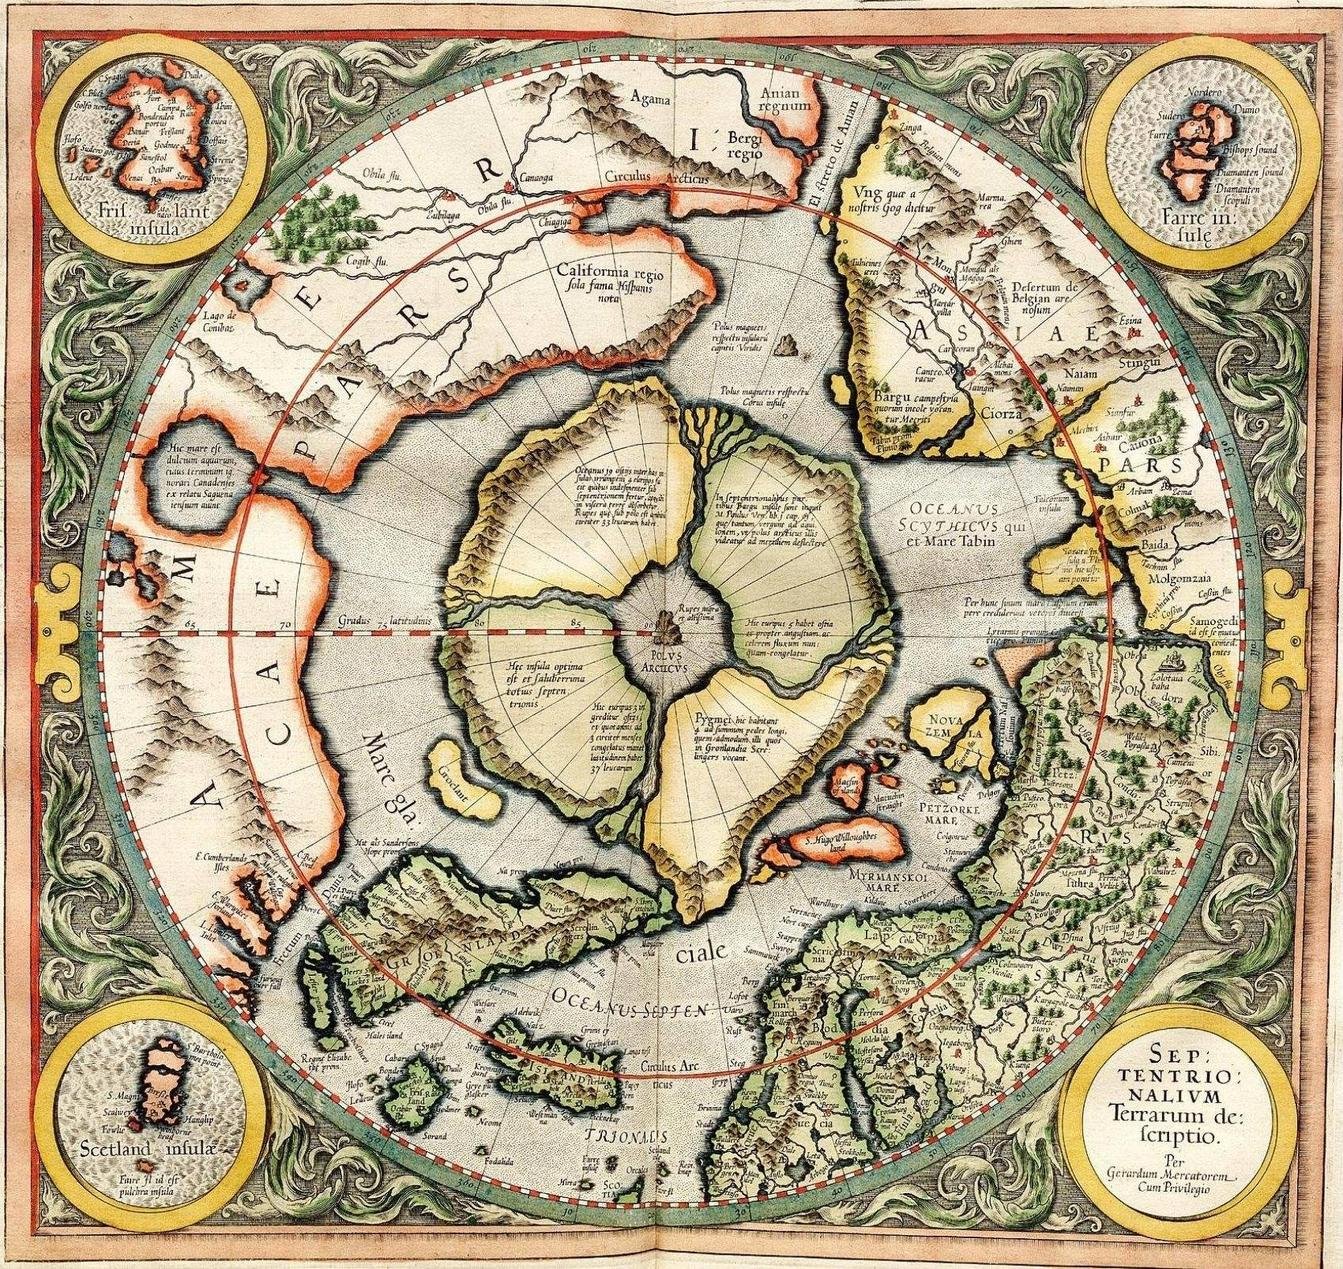 https://en.wikipedia.org/wiki/North_Pole#/media/File:Mercator_north_pole_1595.jpg